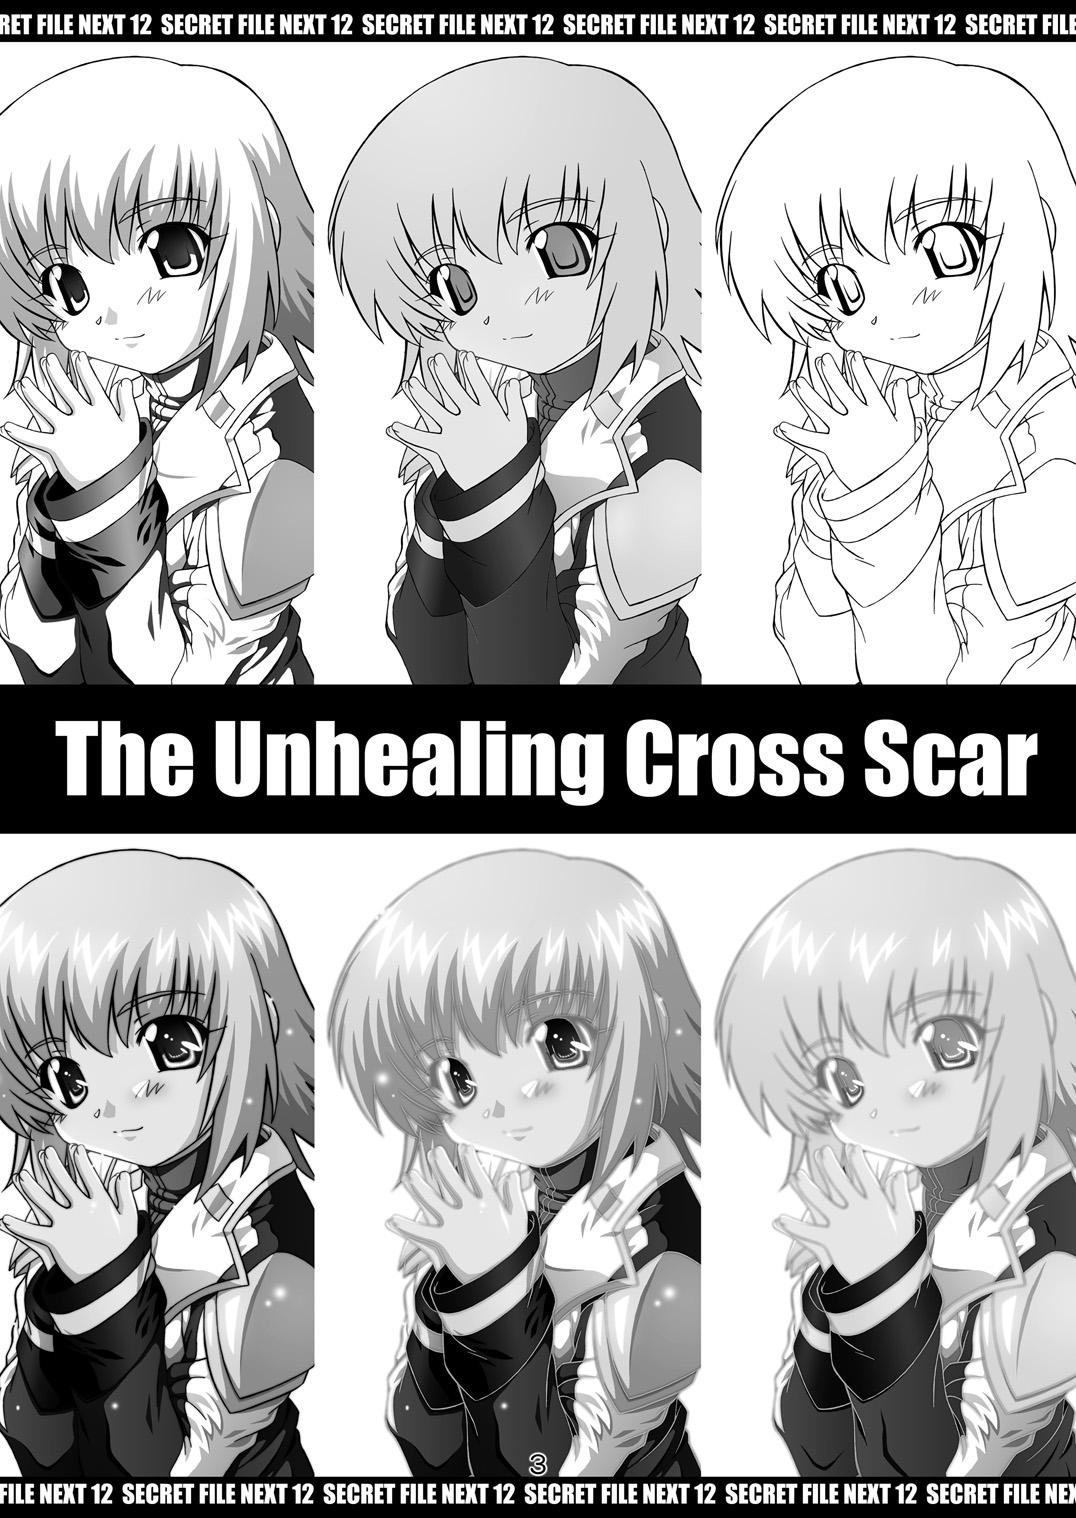 SECRET FILE NEXT 12 - The Unhealing Cross Scar 2